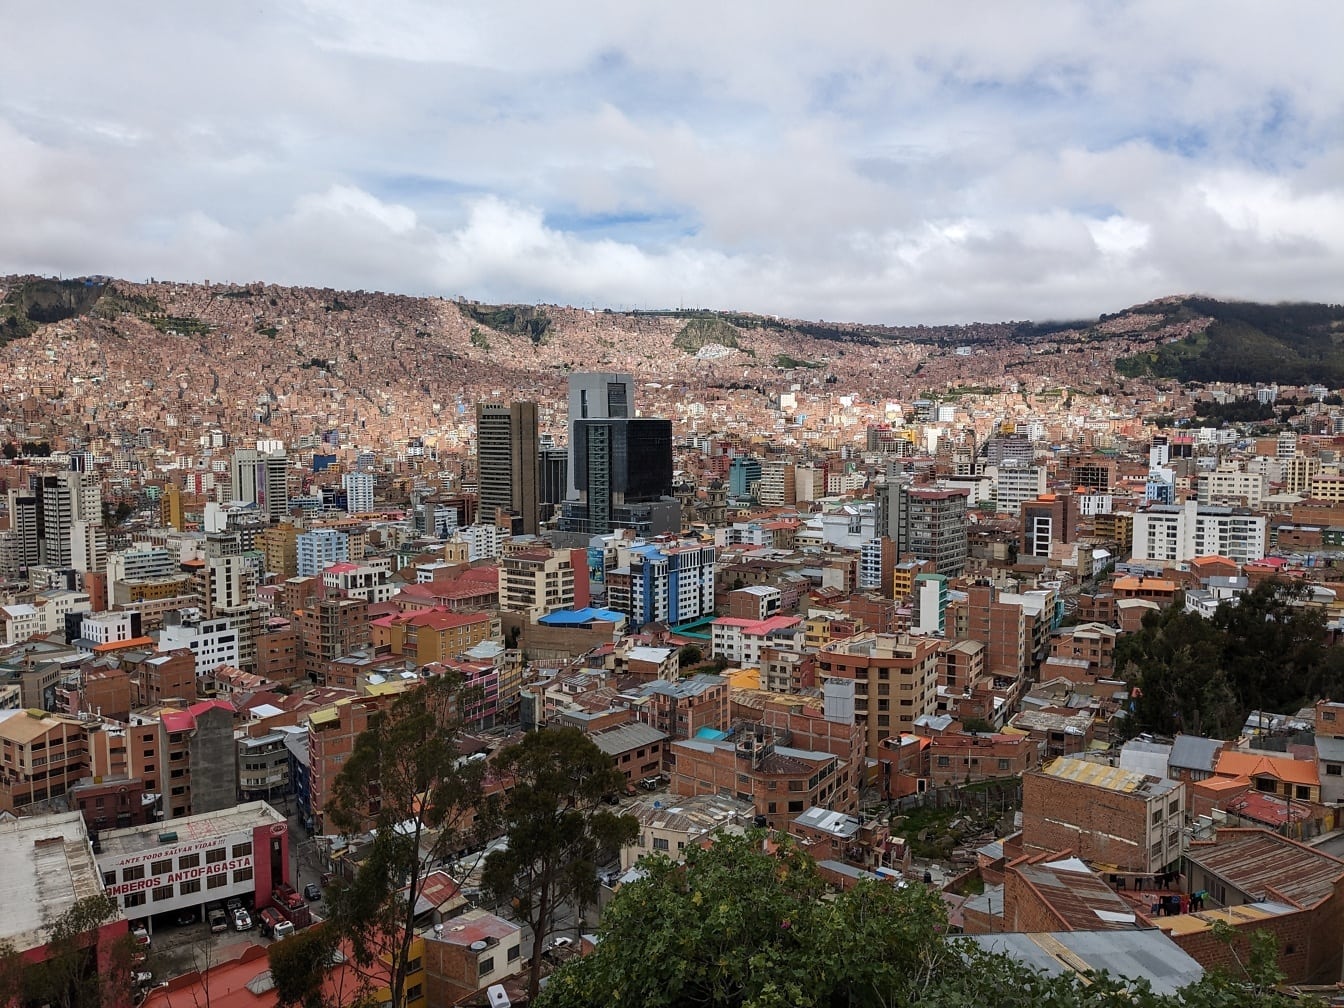 Pemandangan kota panorama Mirador Killi Killi dengan kota La Paz di Bolivia dengan banyak bangunan